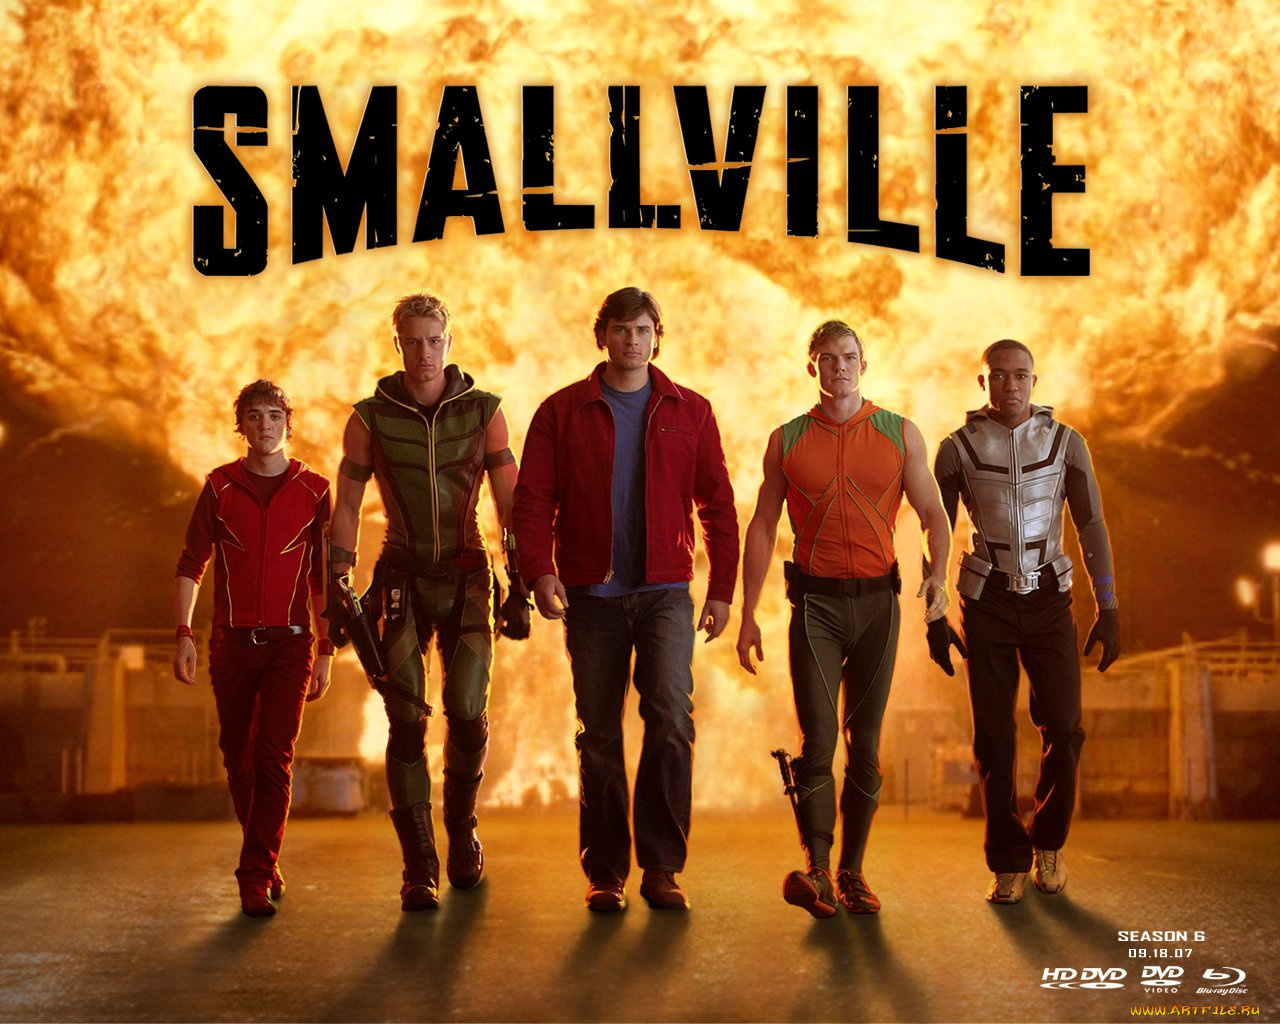 smallville, кино, фильмы